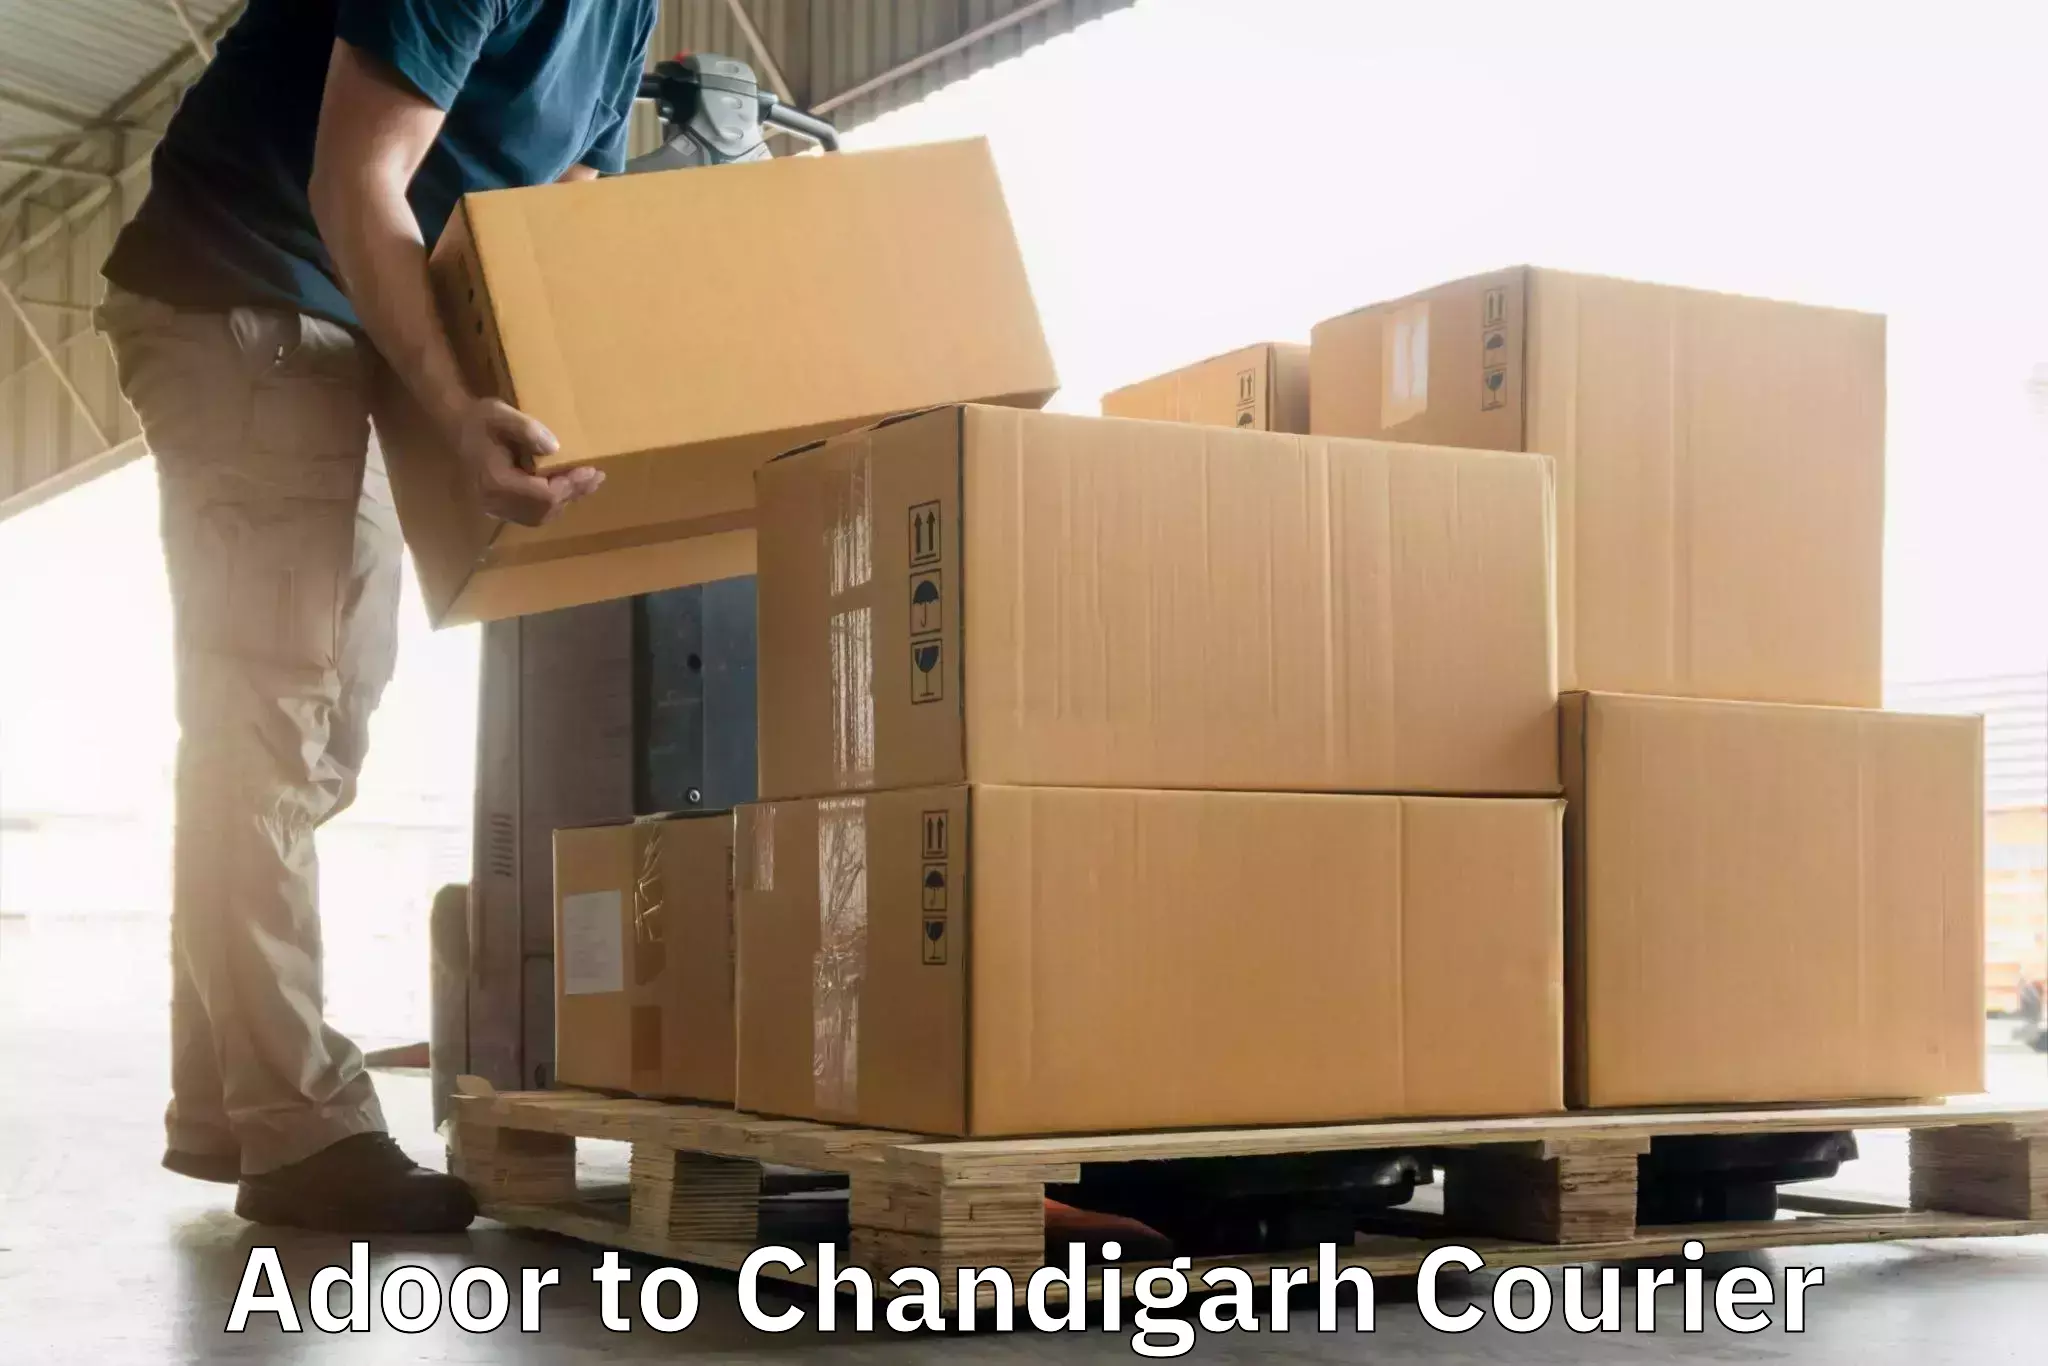 Express logistics providers Adoor to Chandigarh